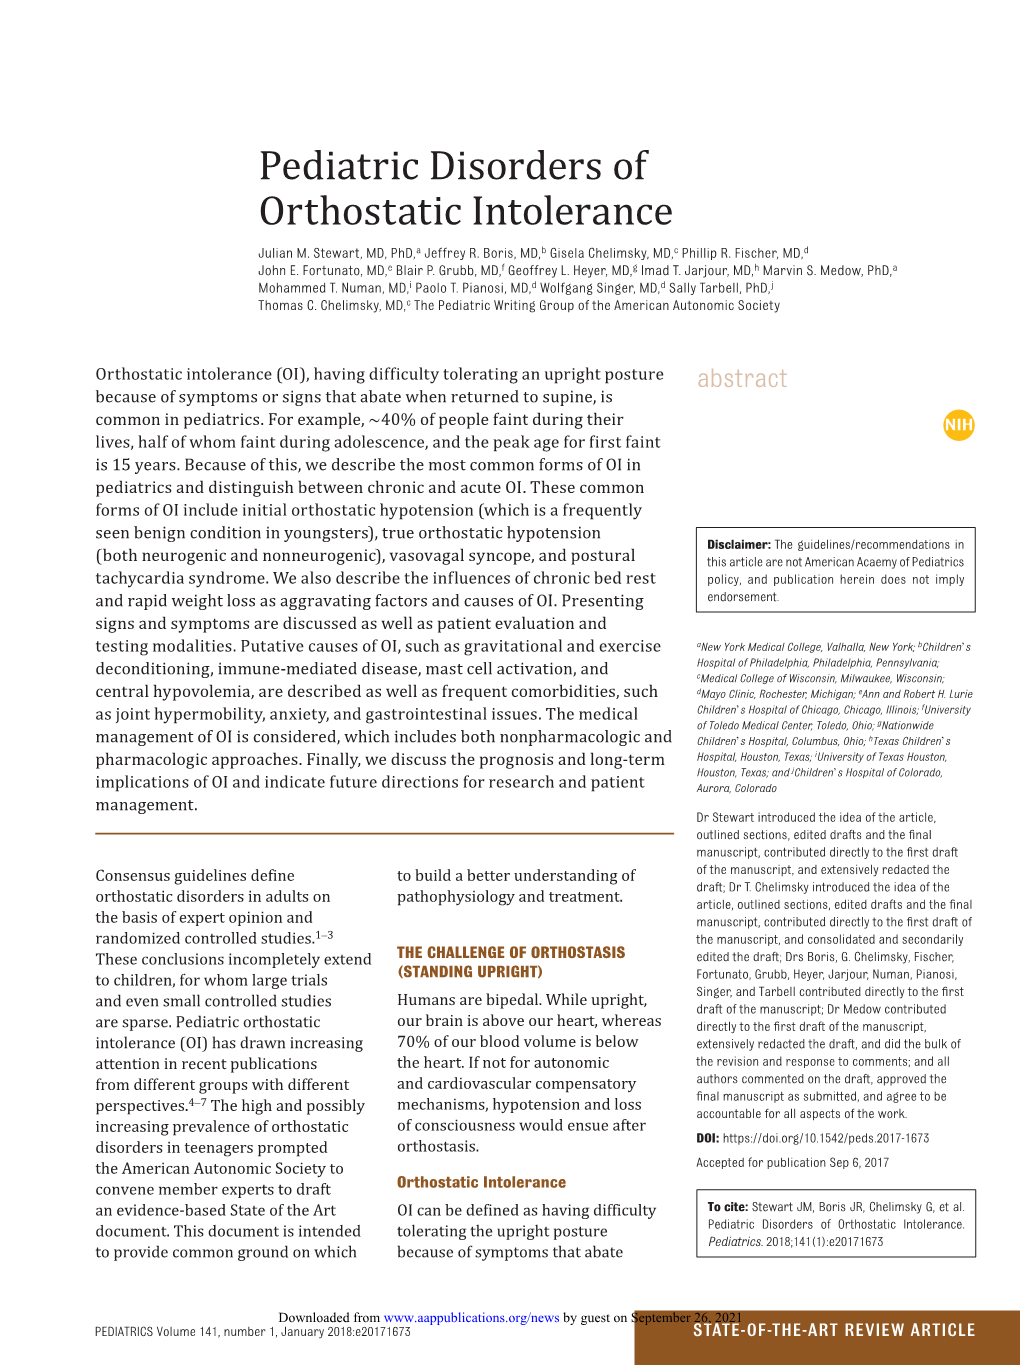 Pediatric Disorders of Orthostatic Intolerance